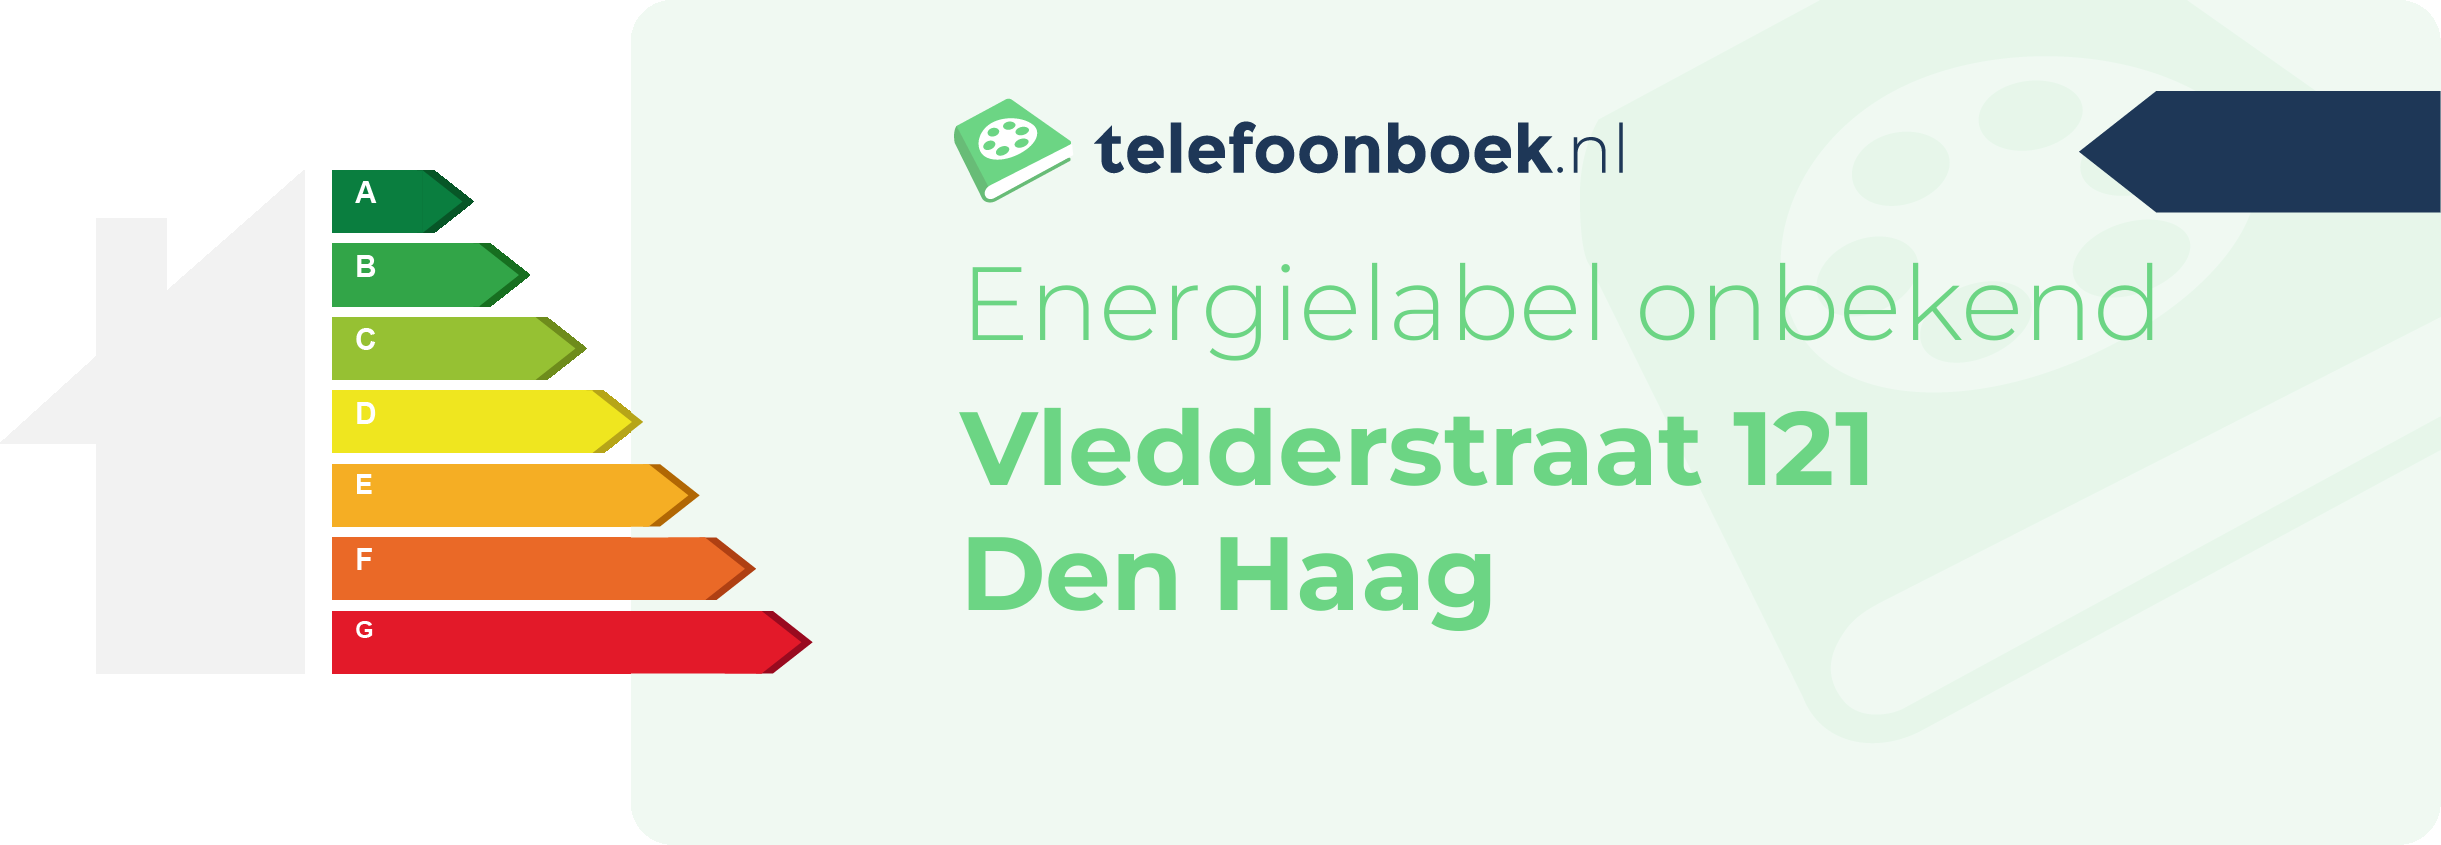 Energielabel Vledderstraat 121 Den Haag